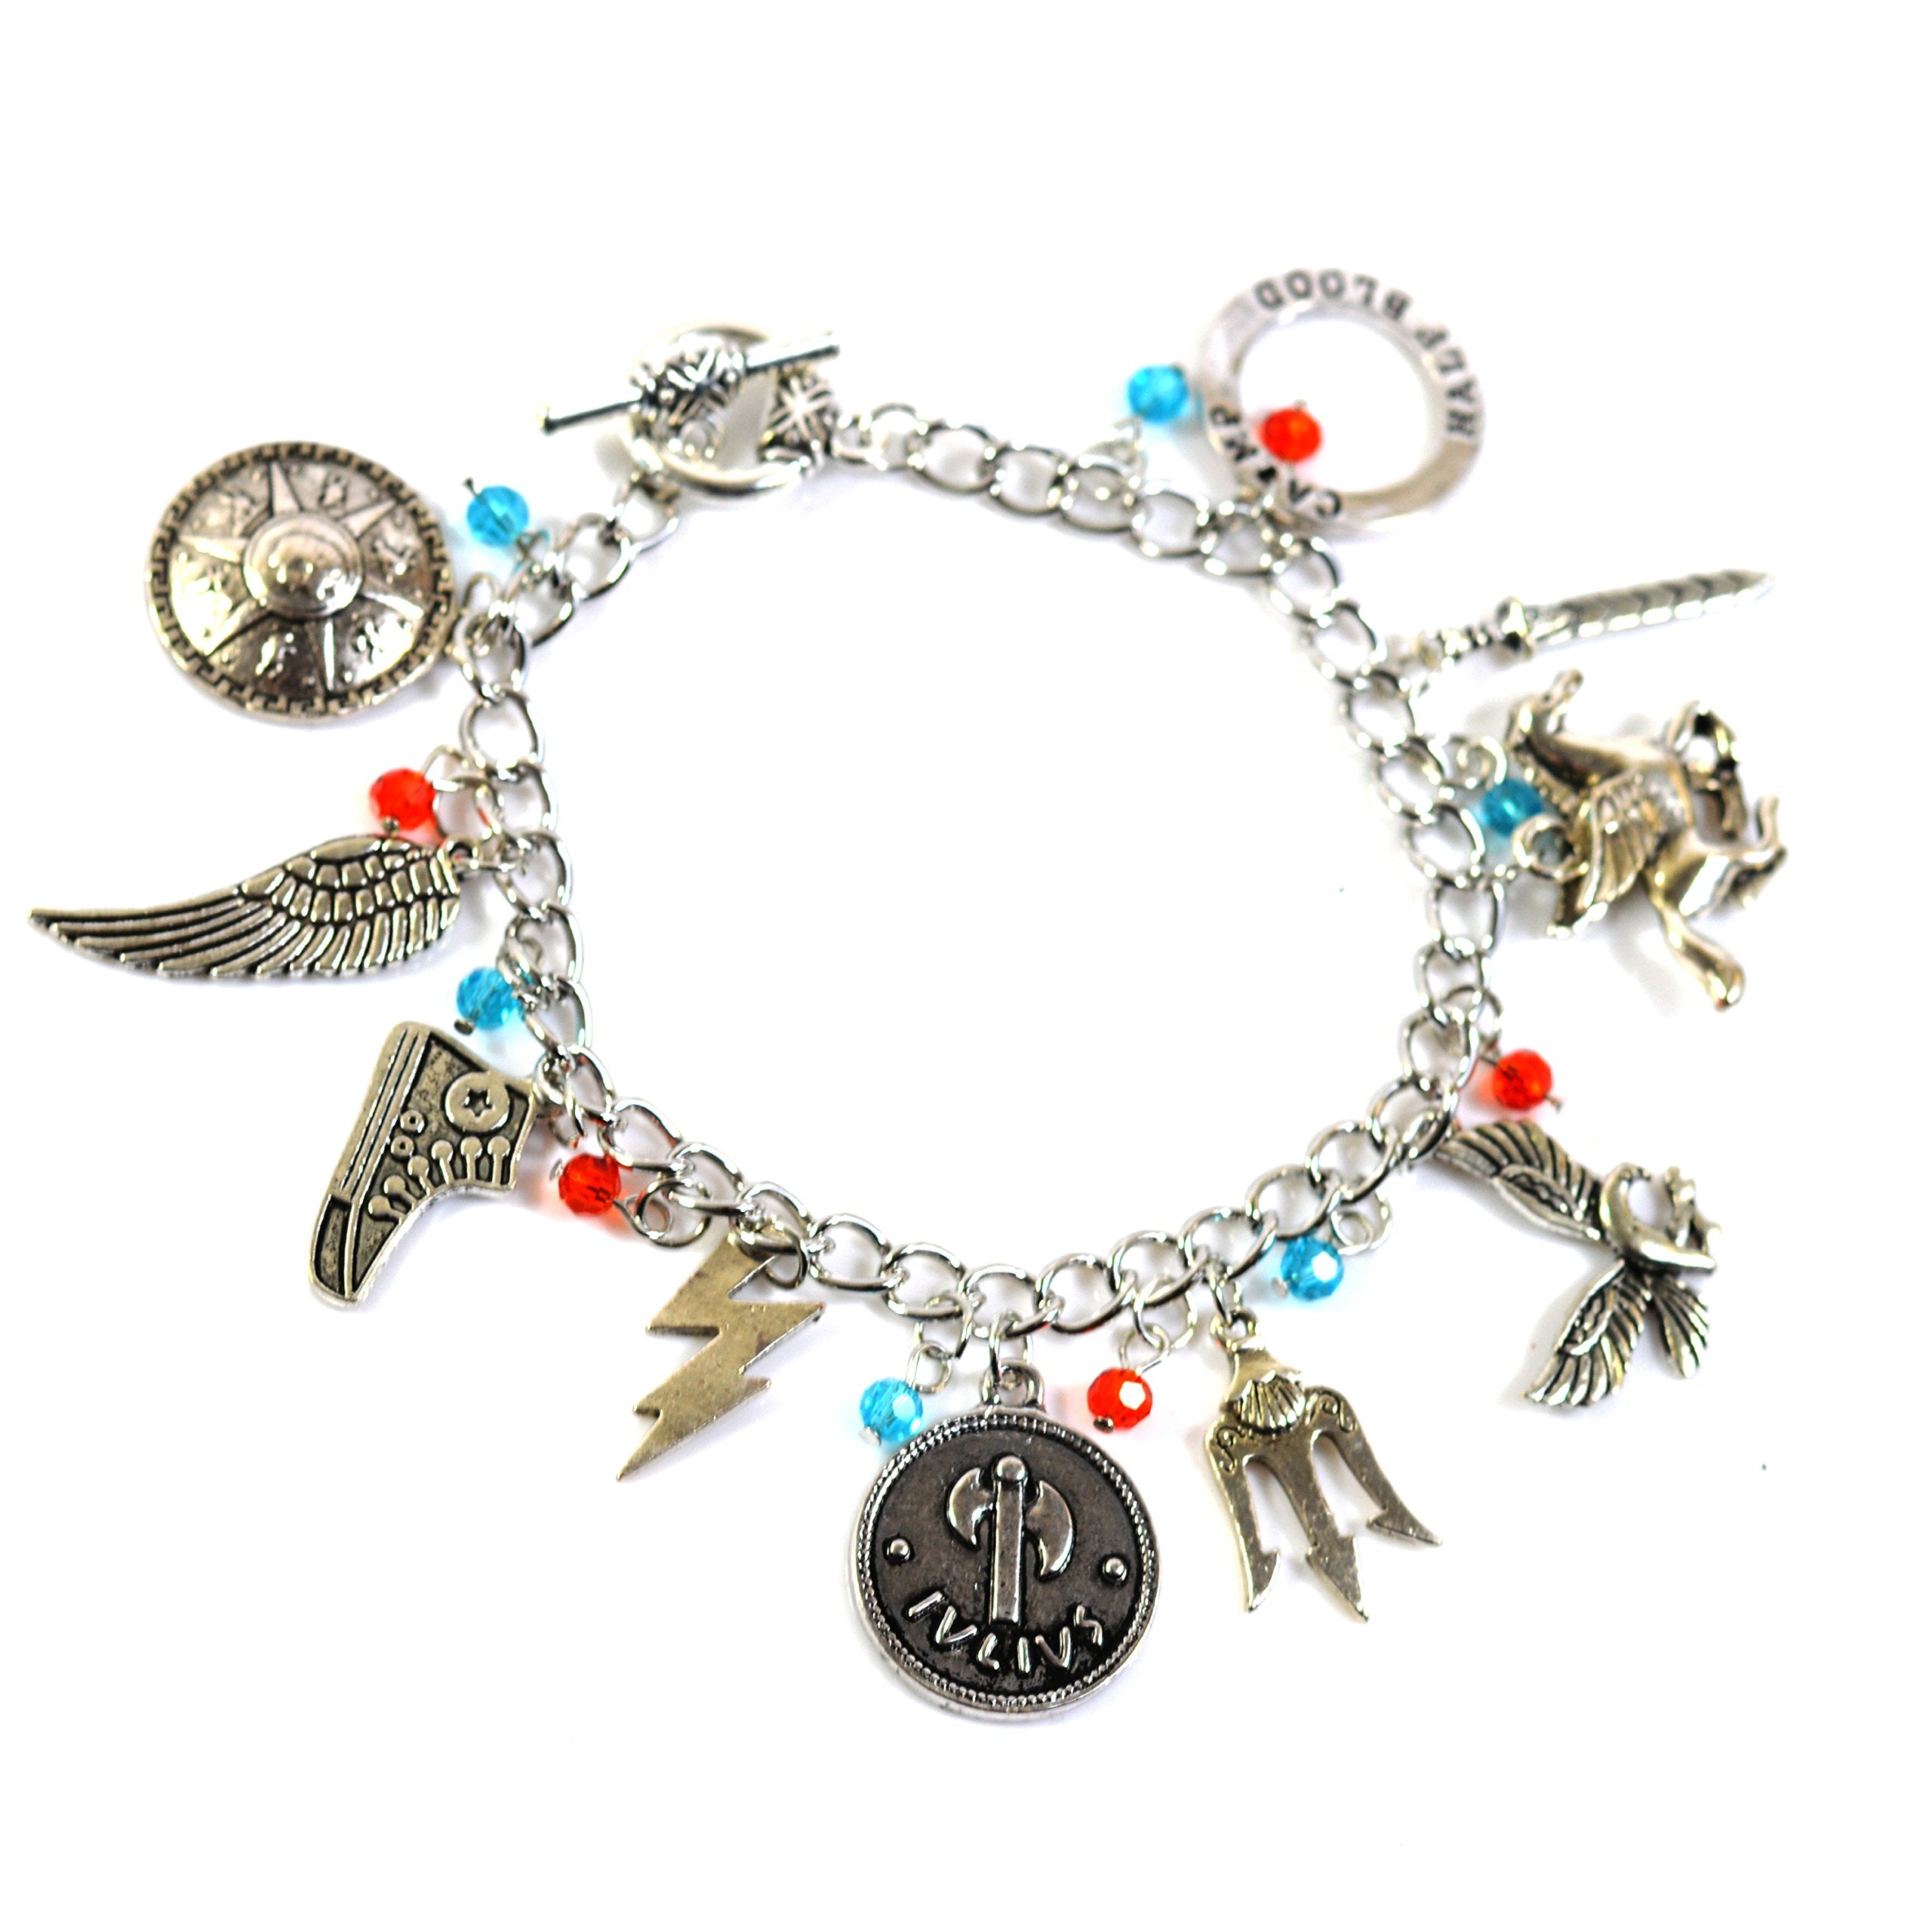 Beaux Bijoux Percy Jackson Inspired Charm Bracelet - Camp Half Blood Sea of Monsters Poseidon Bracelet